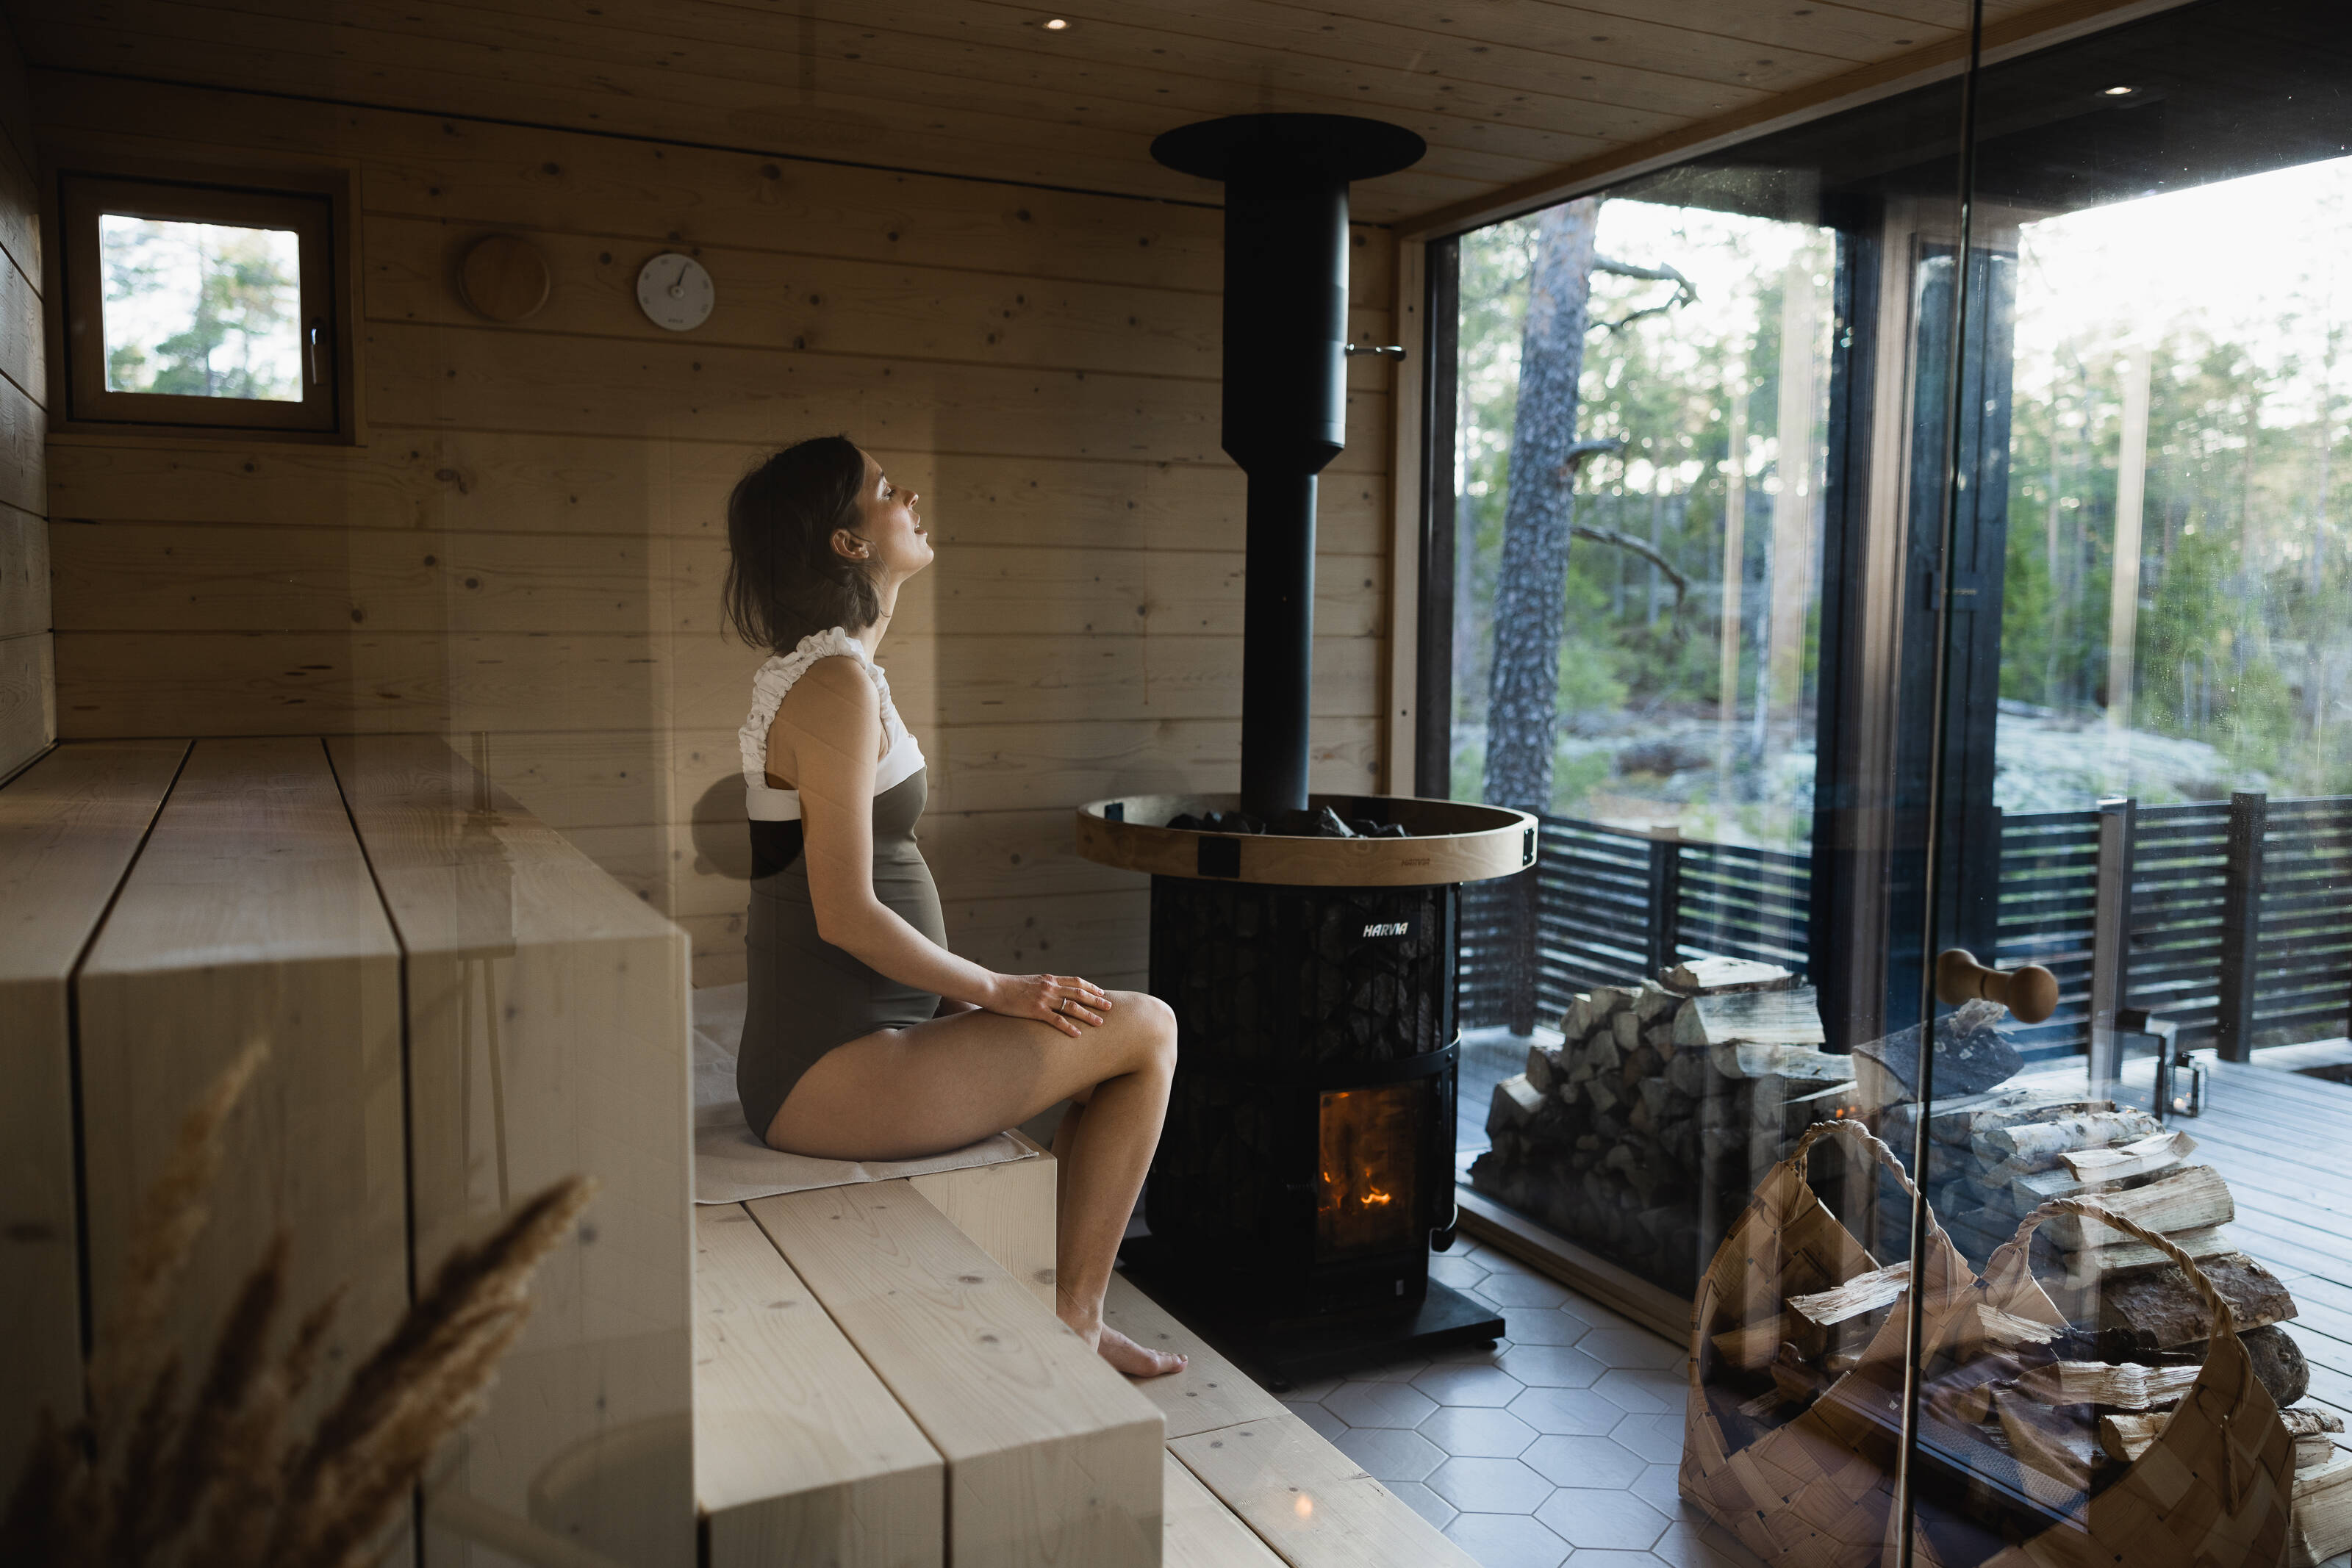 Sleep better with sauna - Sauna from Finland